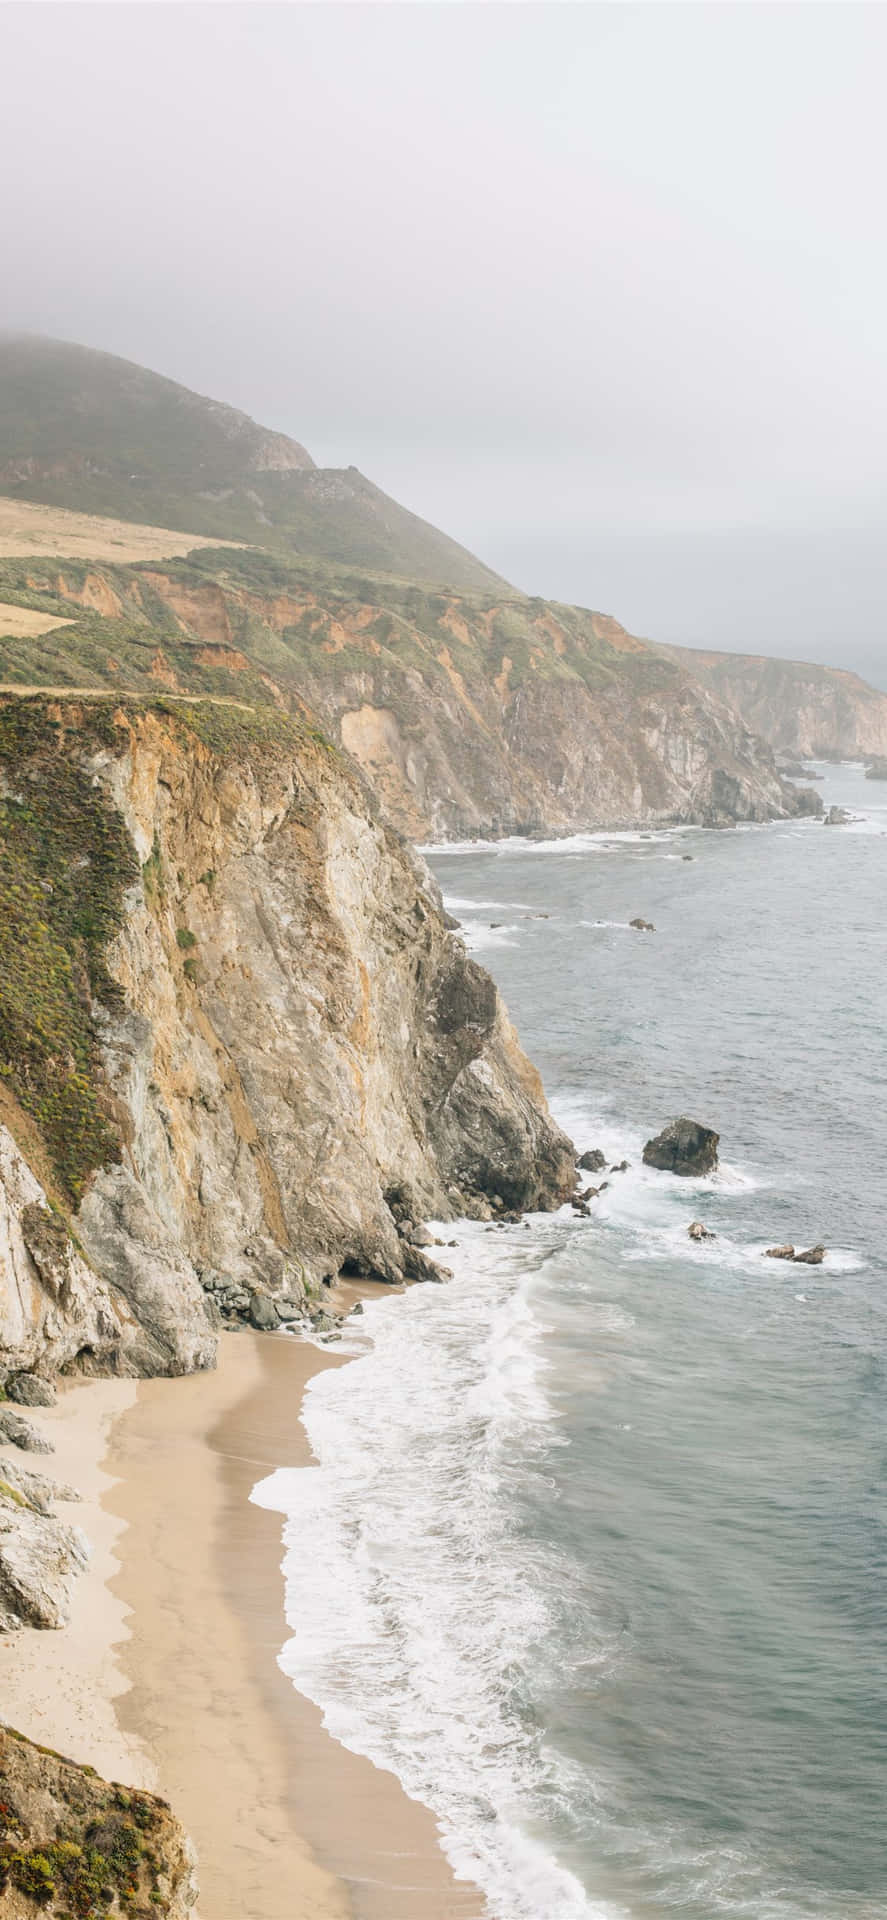 "The beauty of the Big Sur Coastline in California"